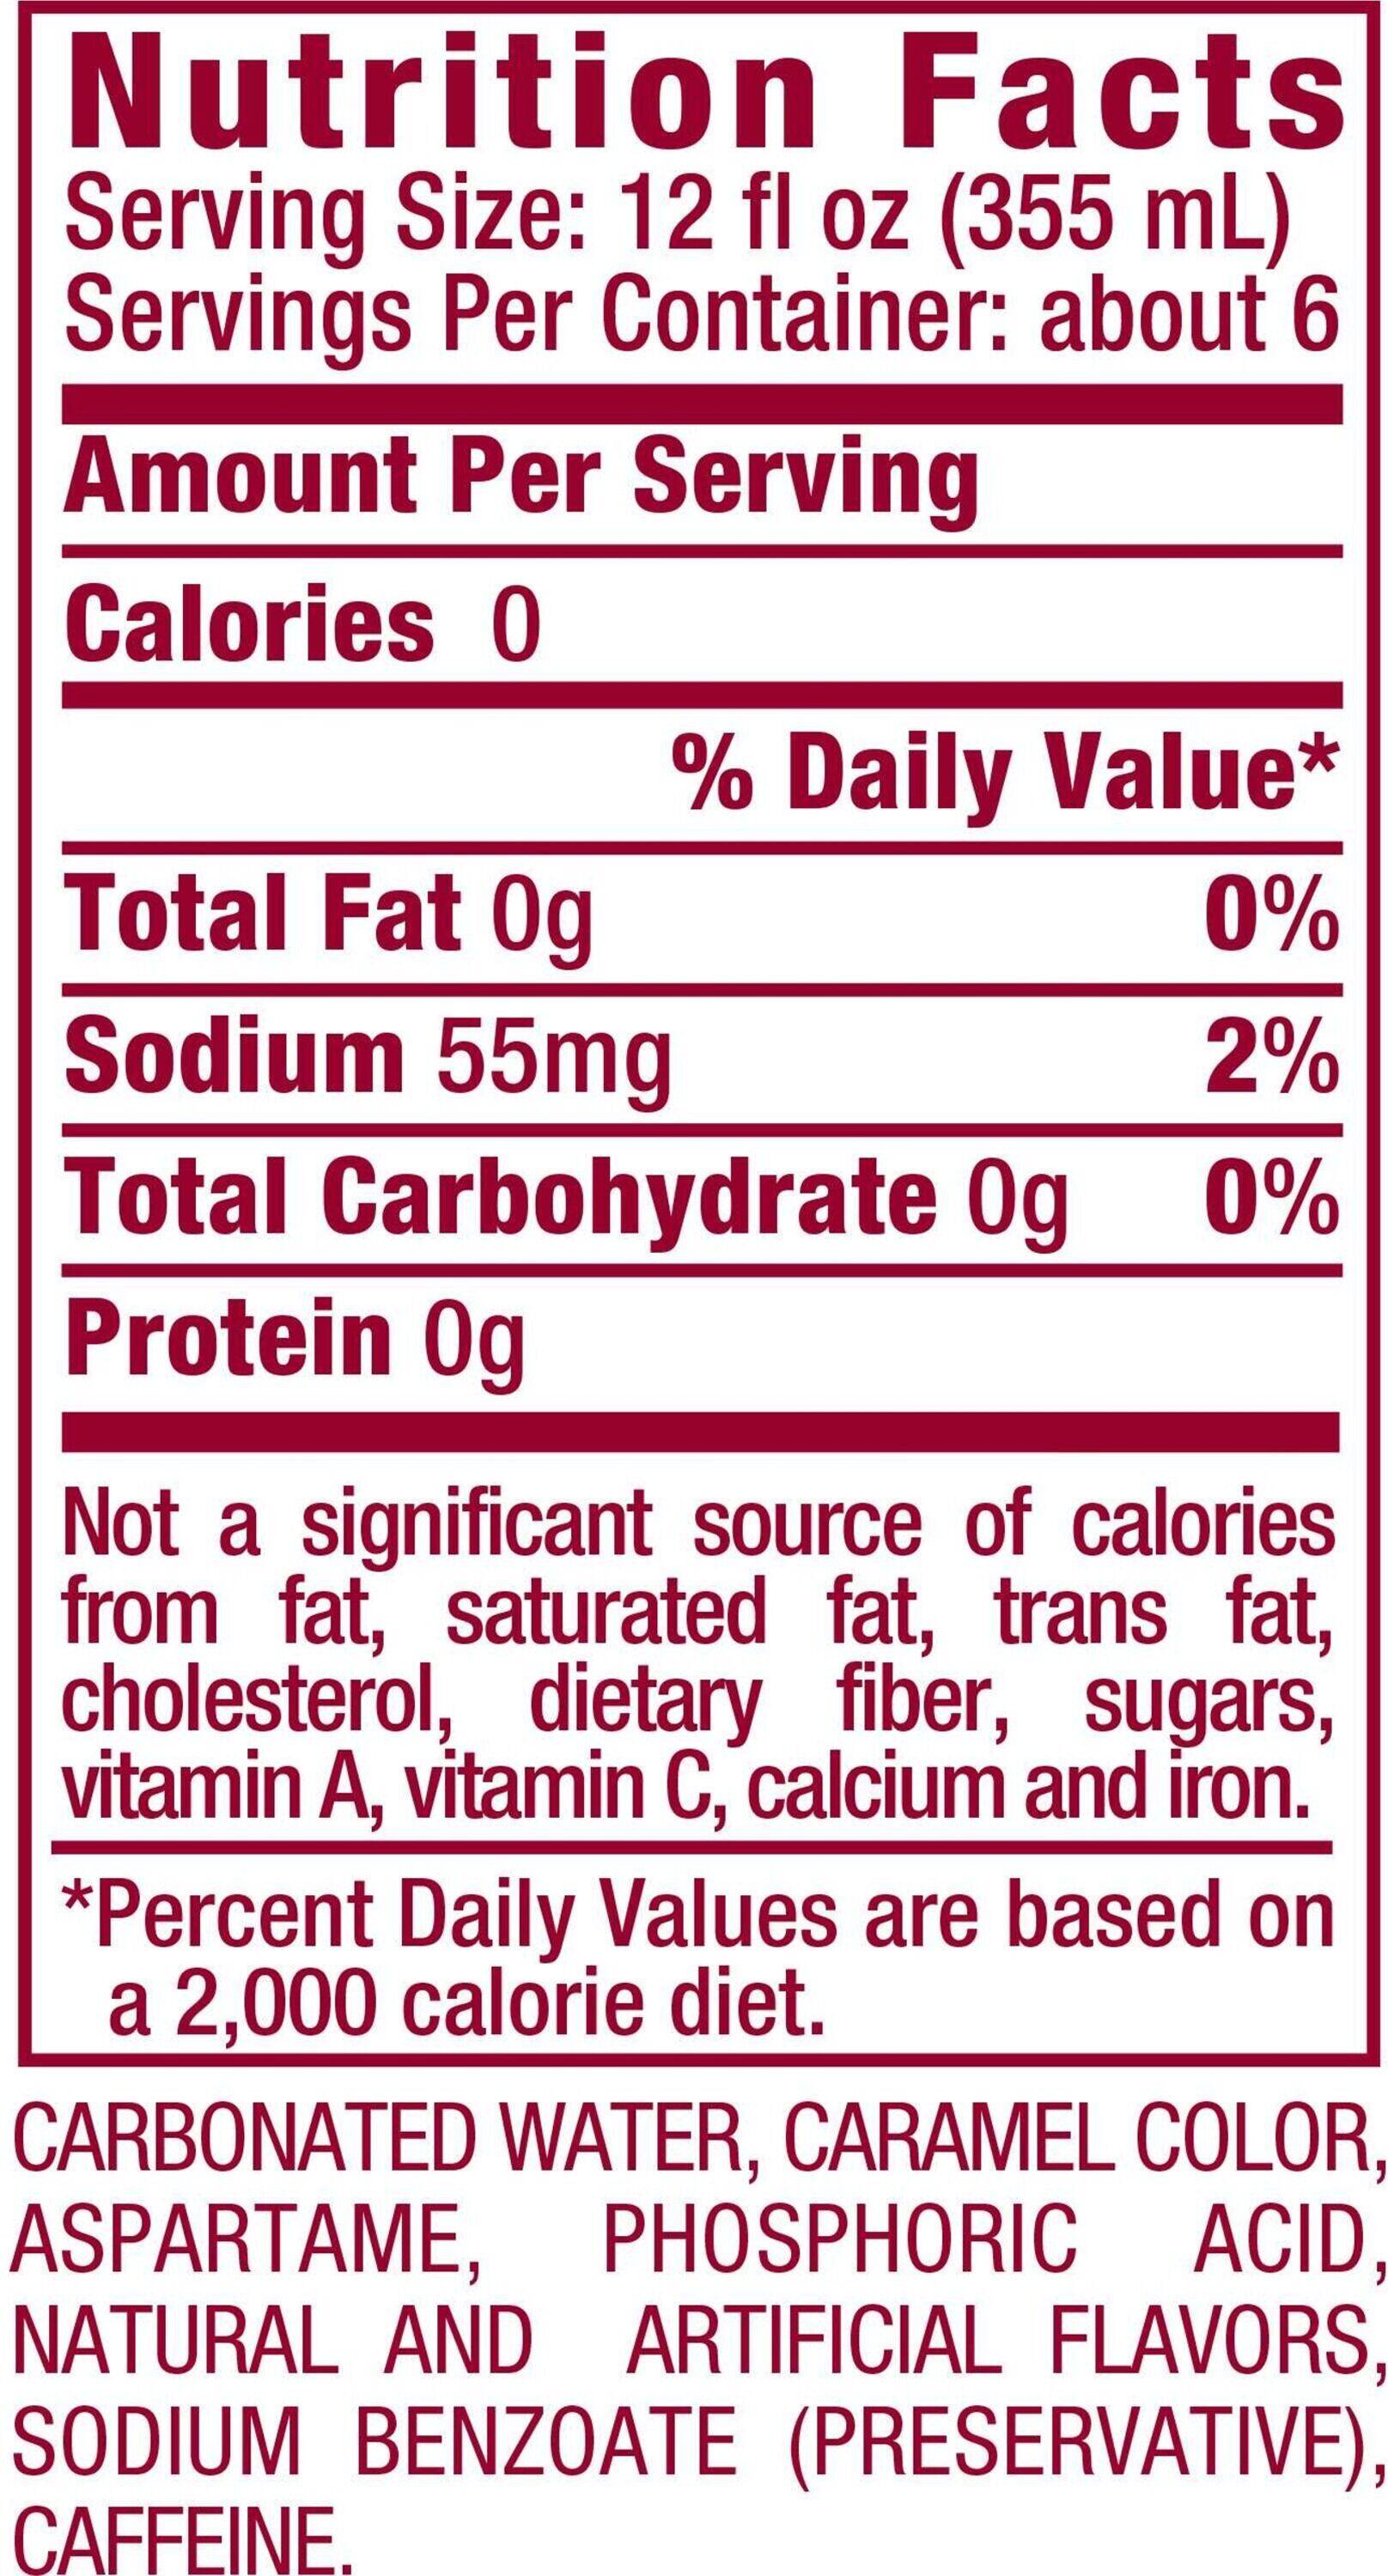 Image describing nutrition information for product Diet Dr Pepper